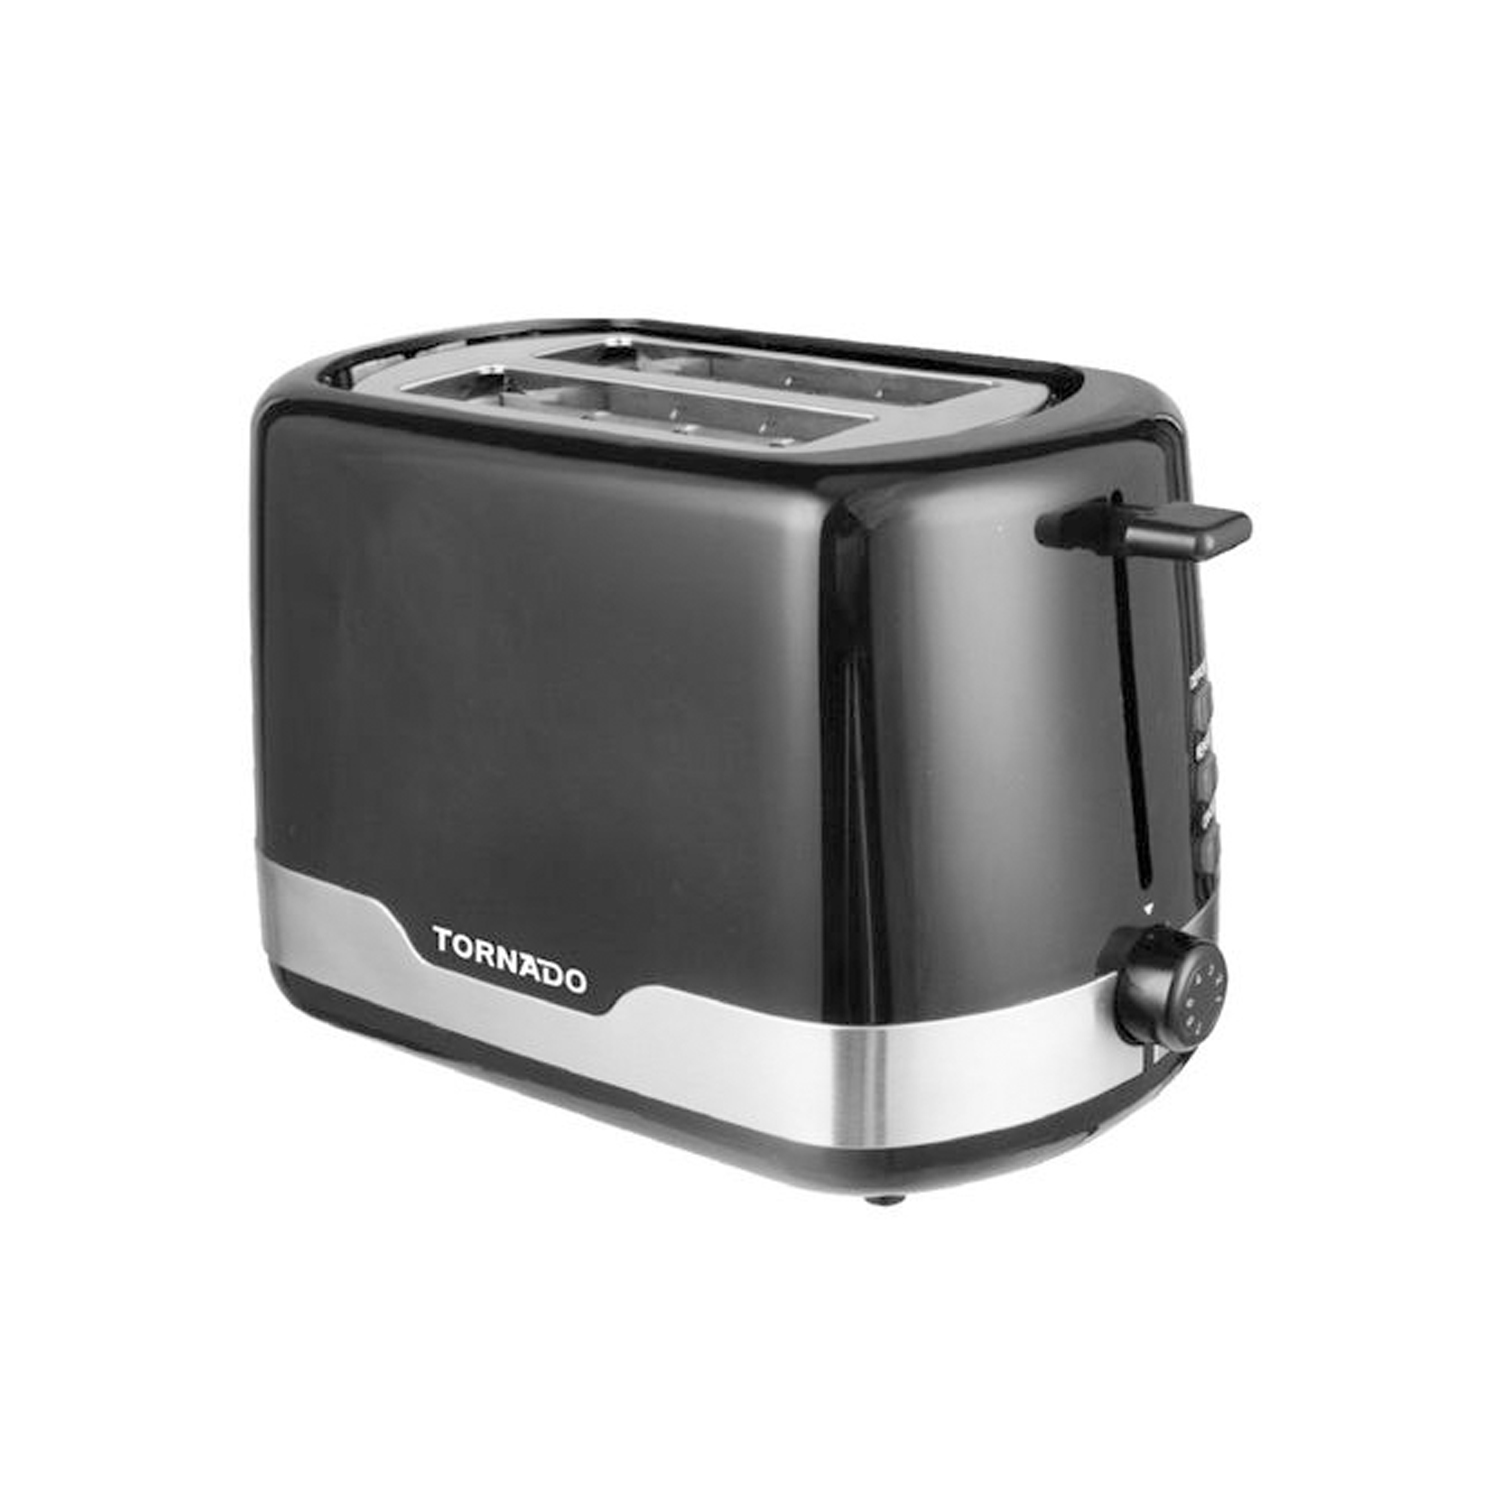 https://aghezty.com/en/products/Toaster/BLACK-DECKER-Pop-Up-Toaster4-Slices1800-wattSilver-Et304-B5-3348/uploads/product/2021-05-05/7.jpg